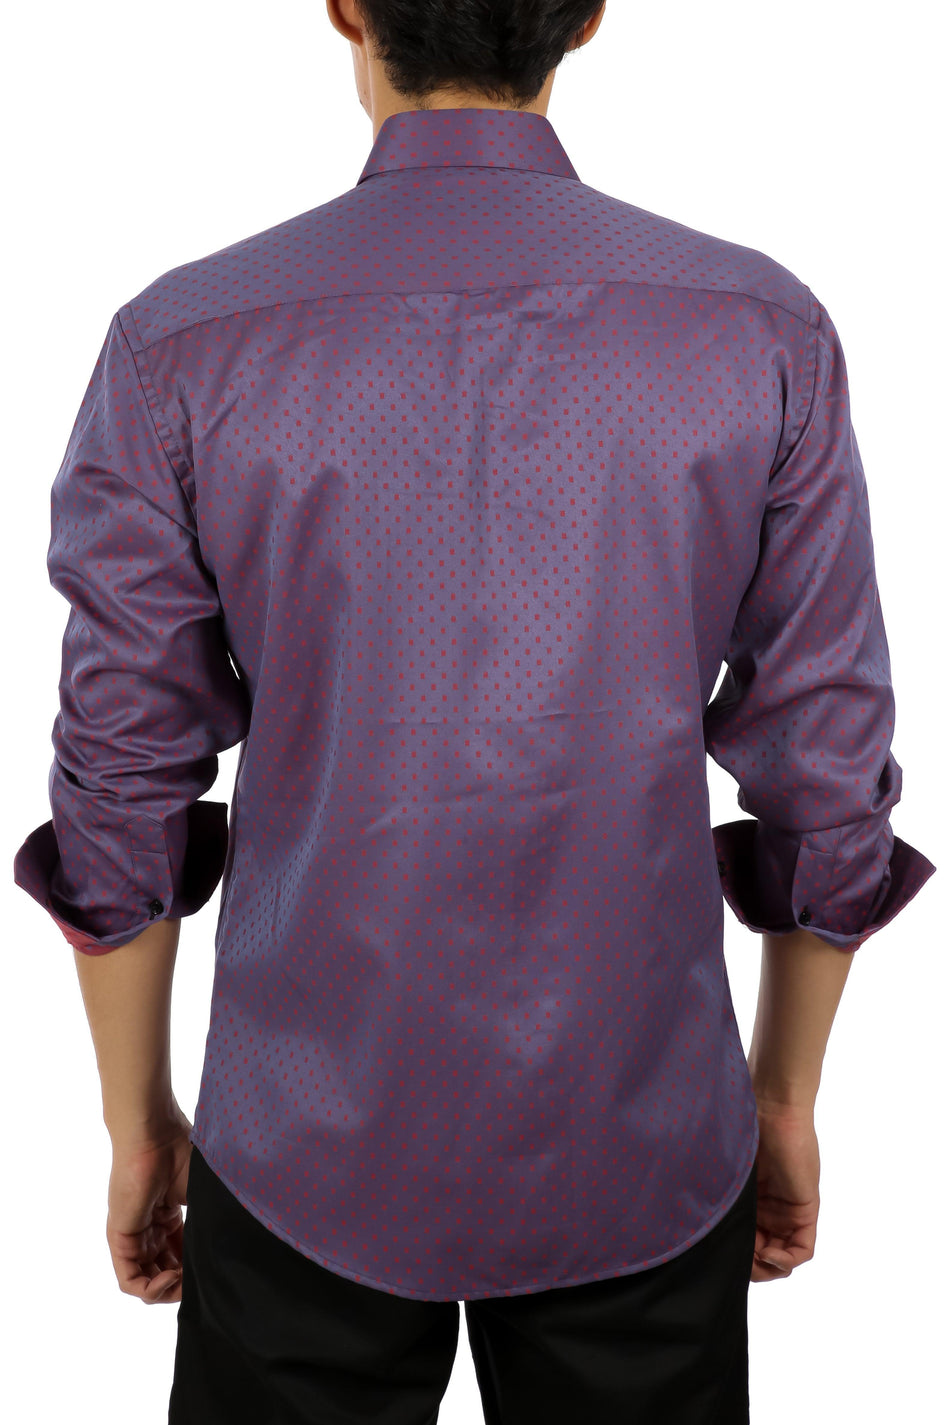 Square Print Contrast Cuff Long Sleeve Dress Shirt Purple